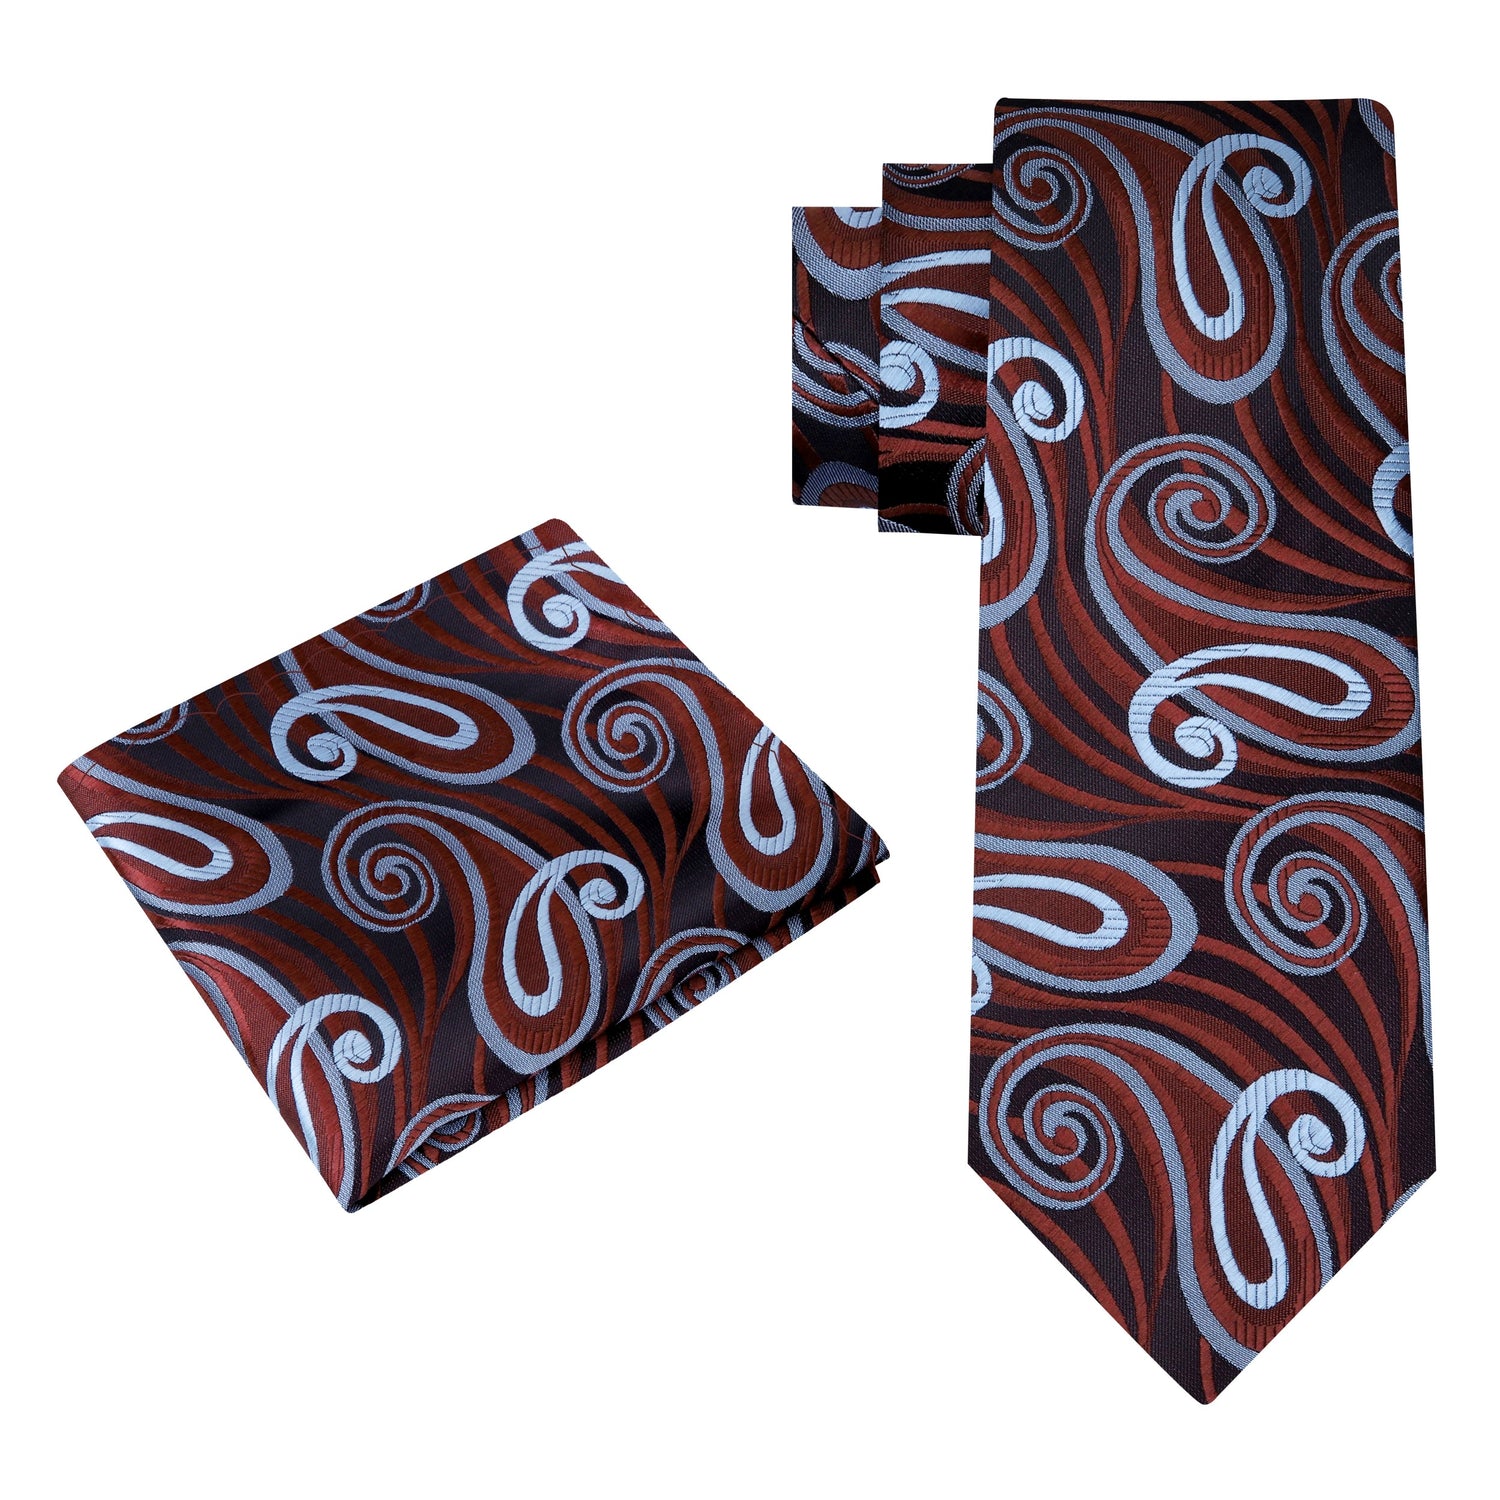 Alt View: A Brown, Dark Brown And Light Blue Paisley Pattern Silk Necktie, Matching Pocket Square